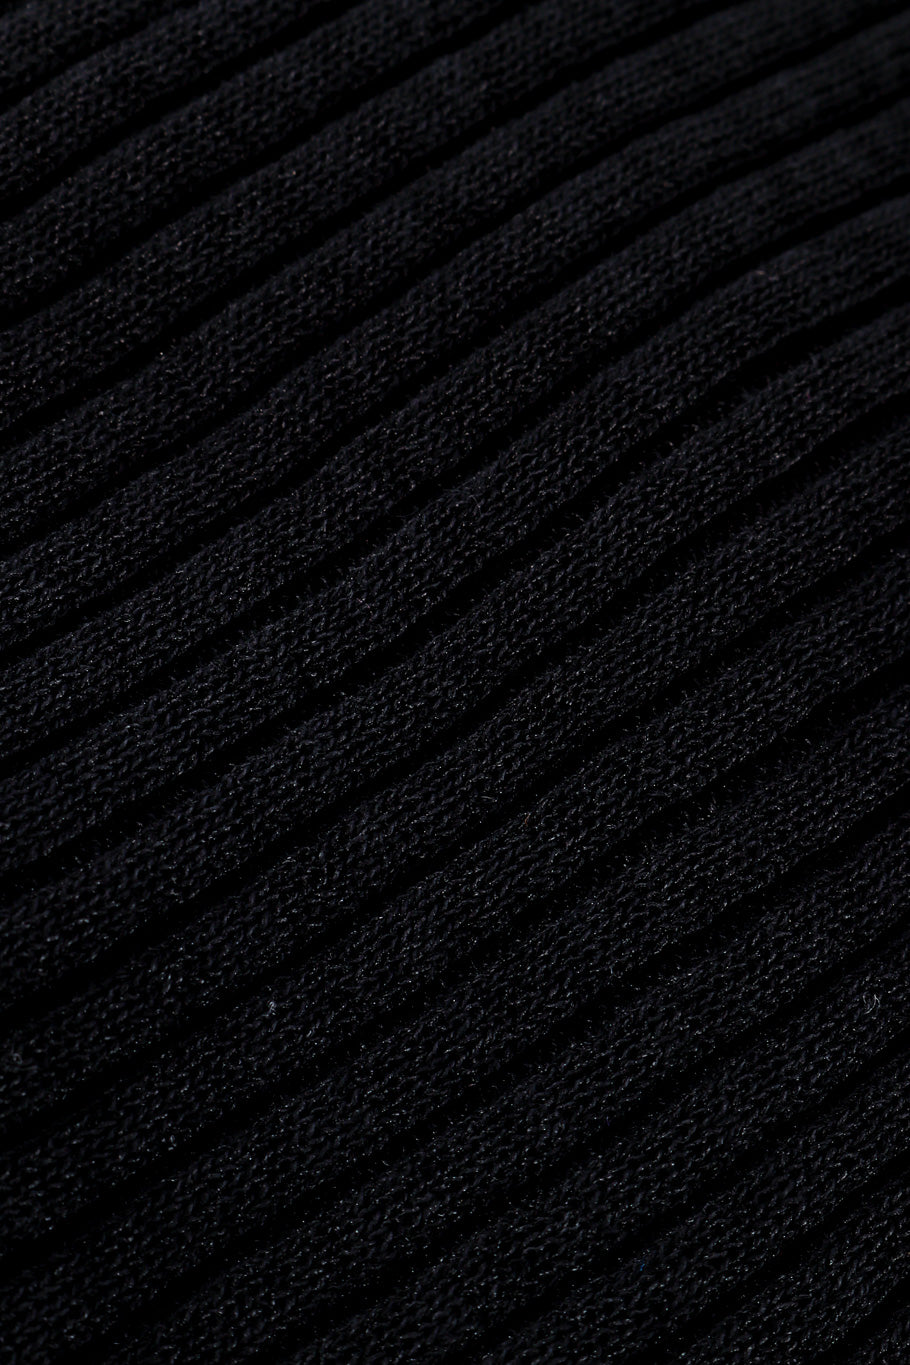 Chanel Ribbed Knit Cardigan fabric closeup @Recessla